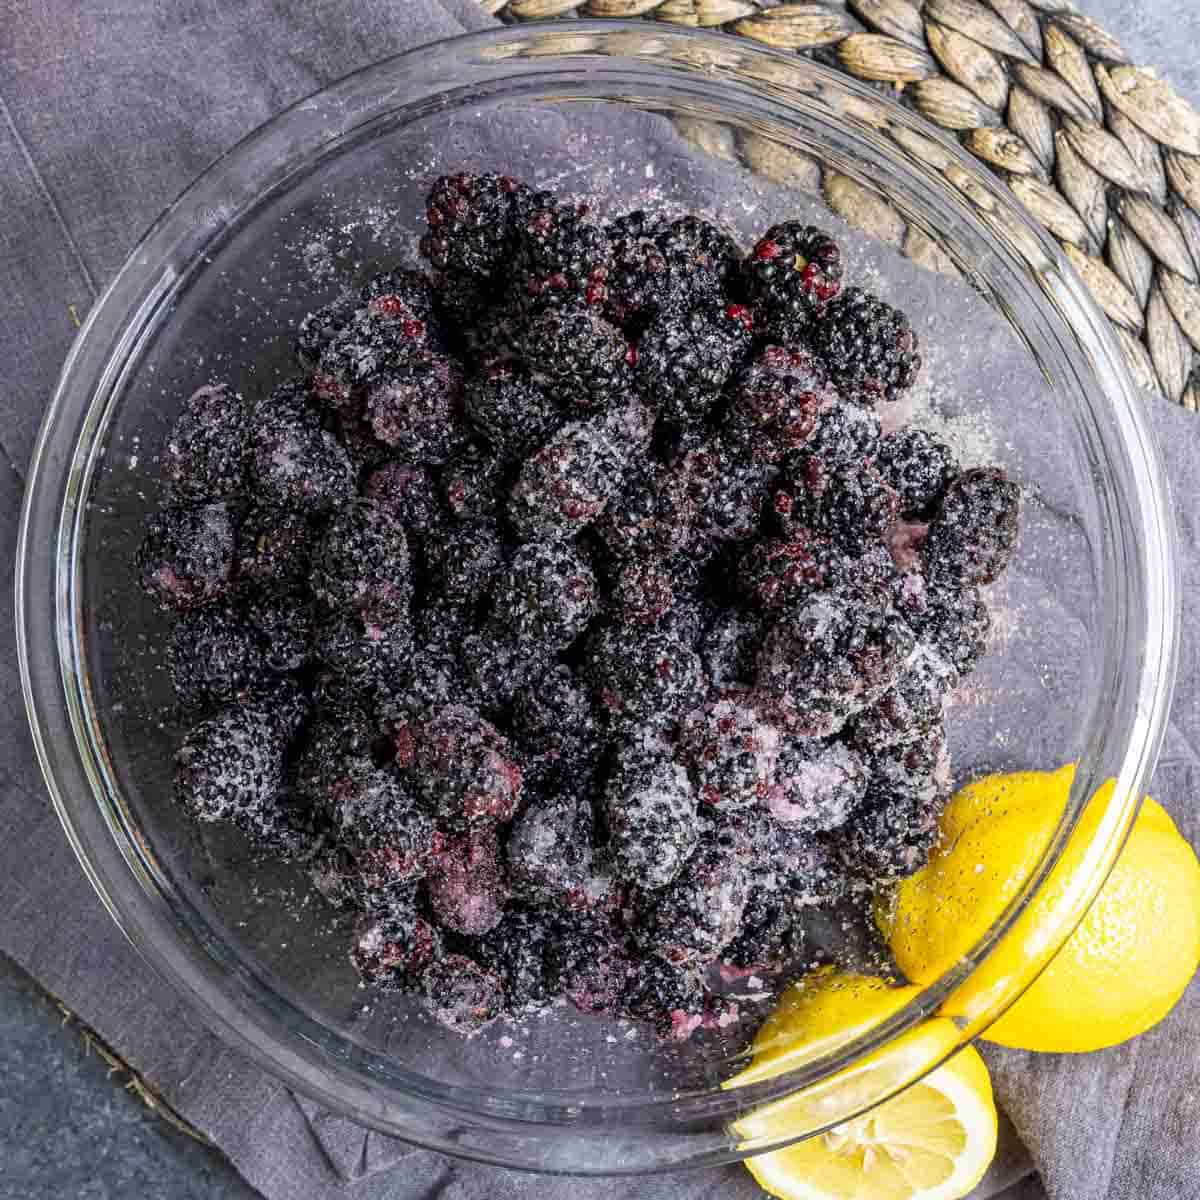 sugared blackberrys in glass bowl to make easy blackberry cobbler